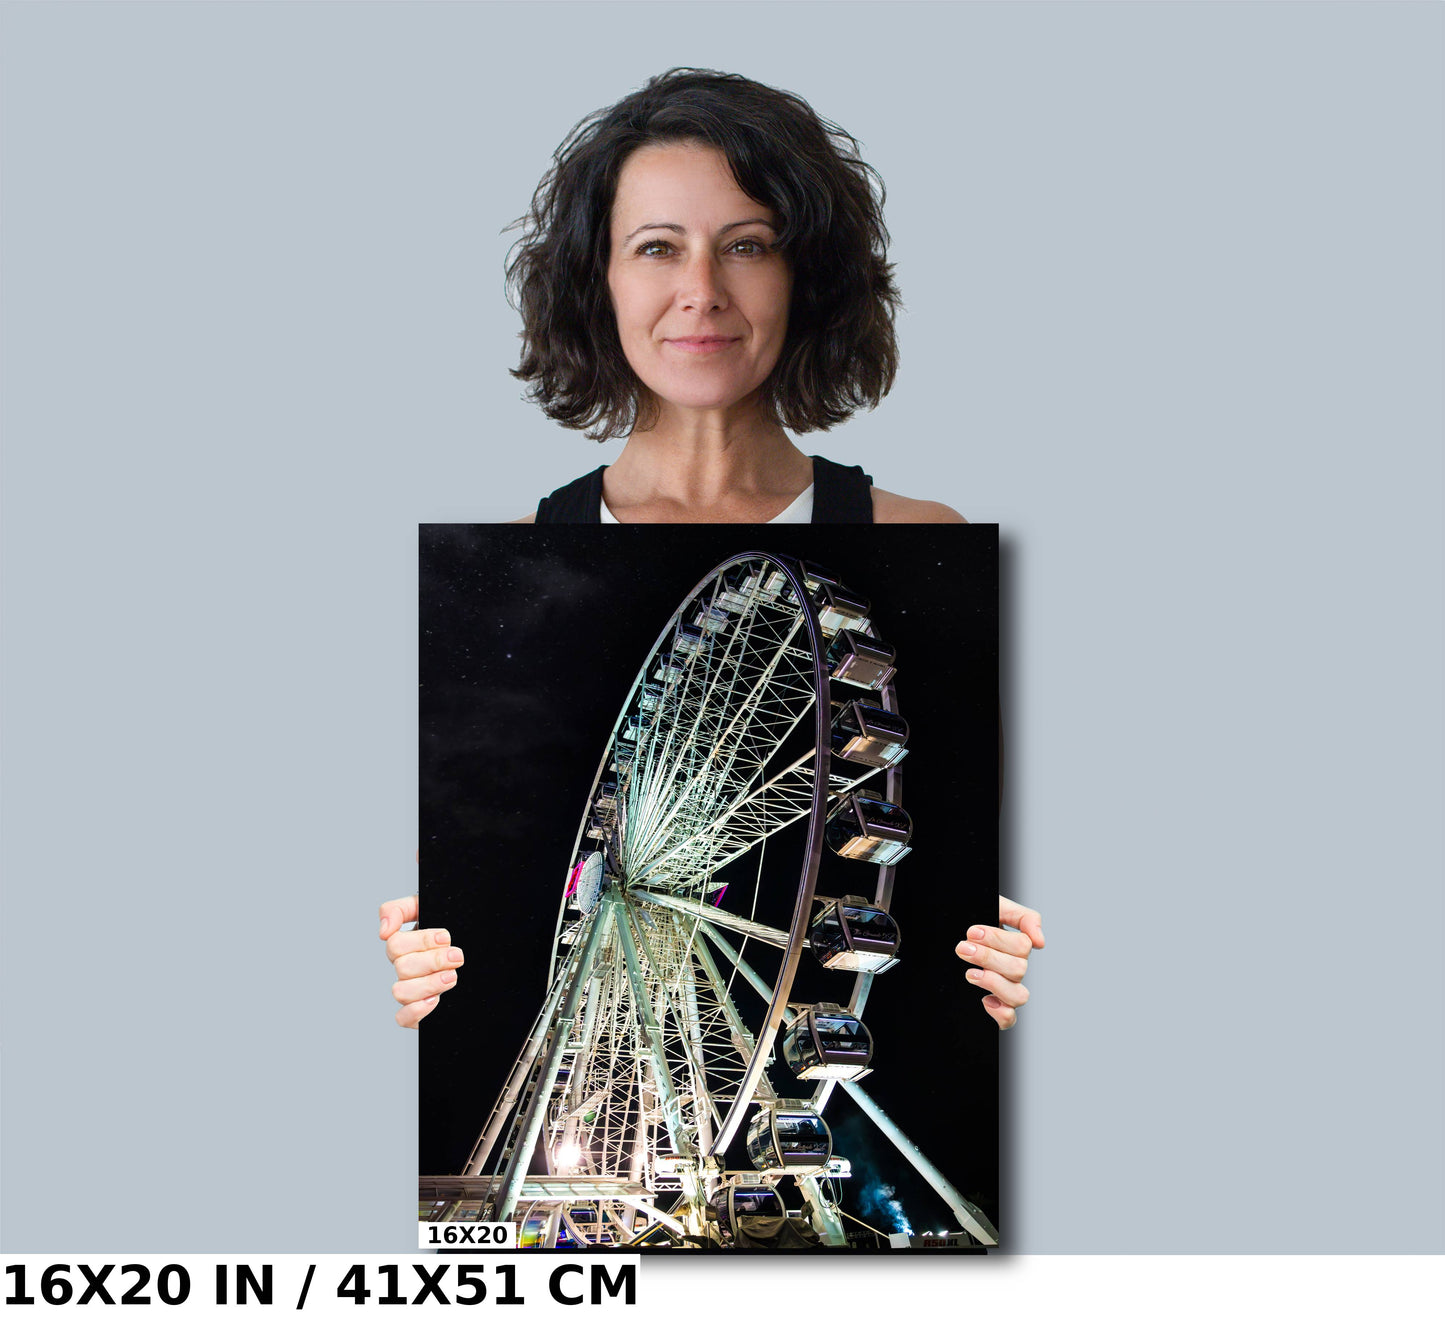 Elevated Excitement: Ferris Wheel Thrills in Arizona State Fair Wall Art Photography Aluminum Metal Print